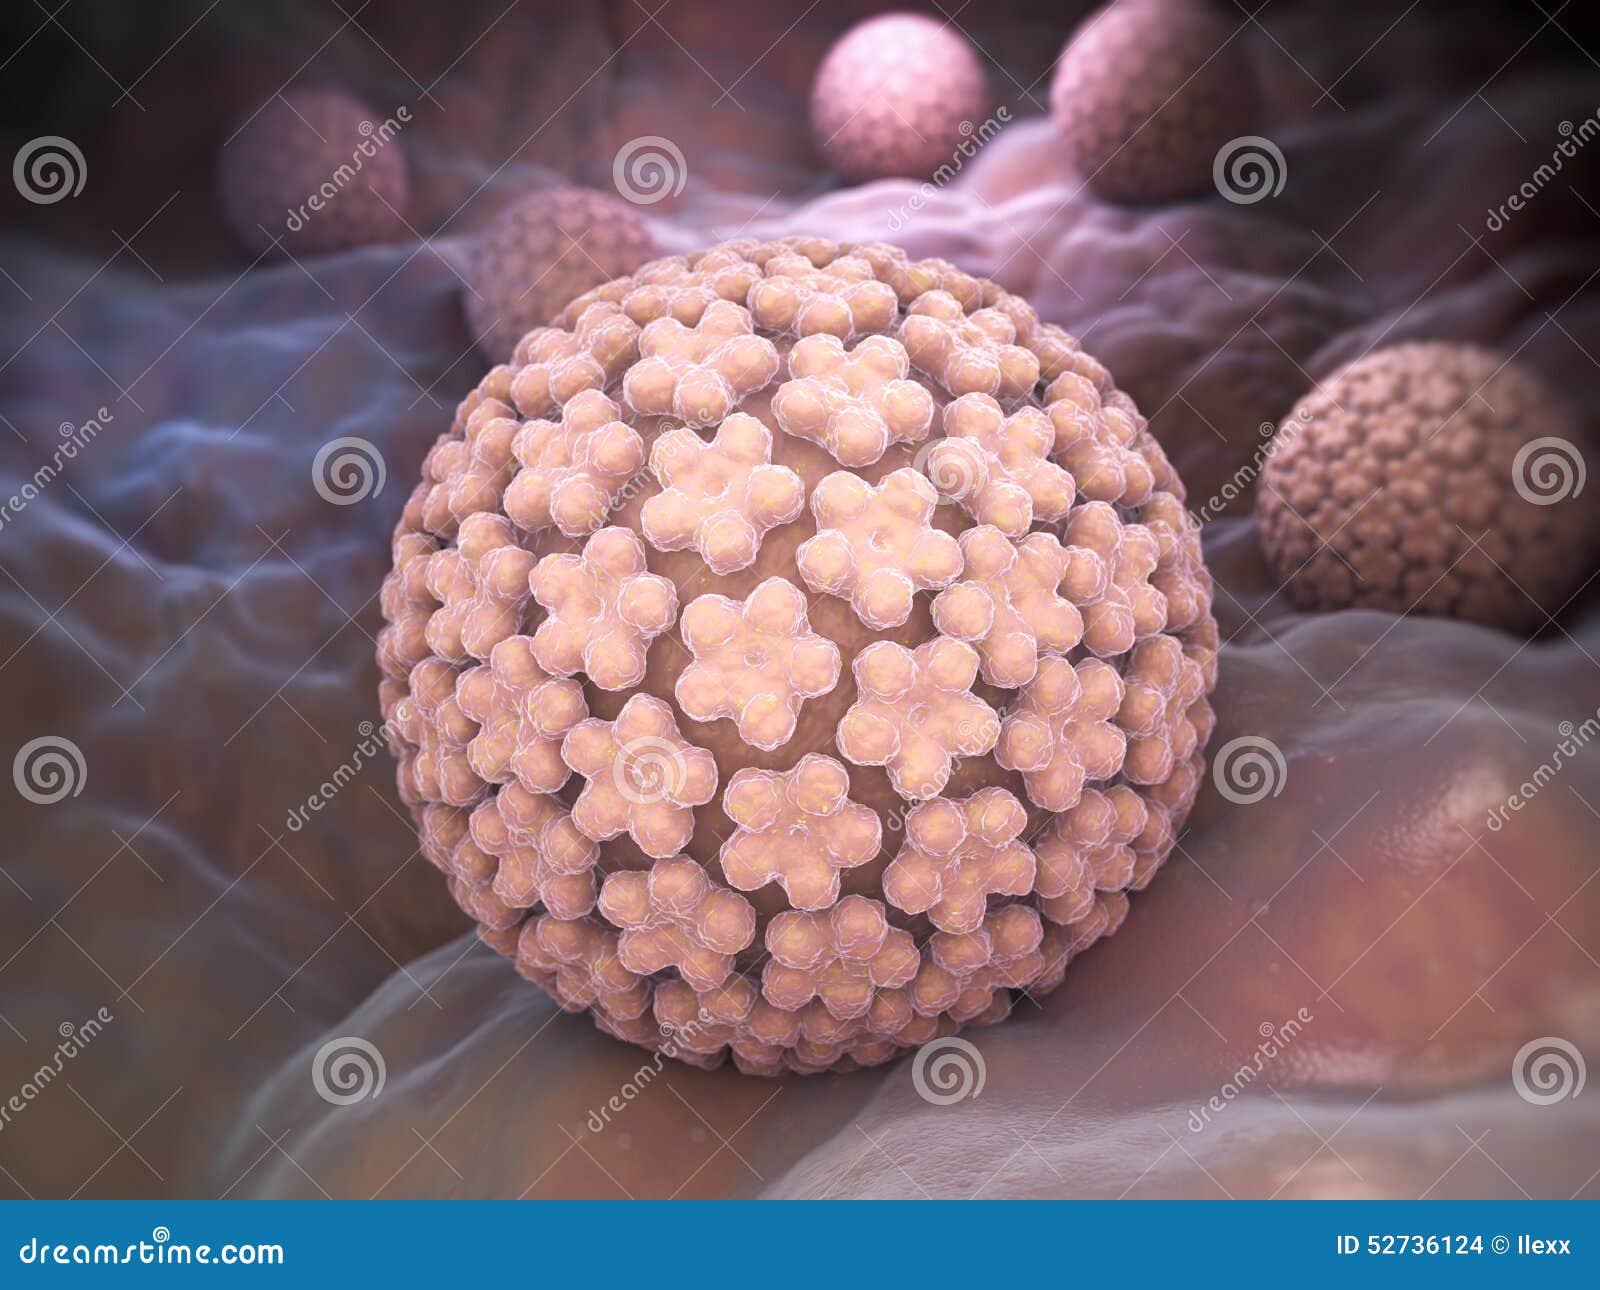 human papillomavirus virus family immagini di papilloma alla lingua